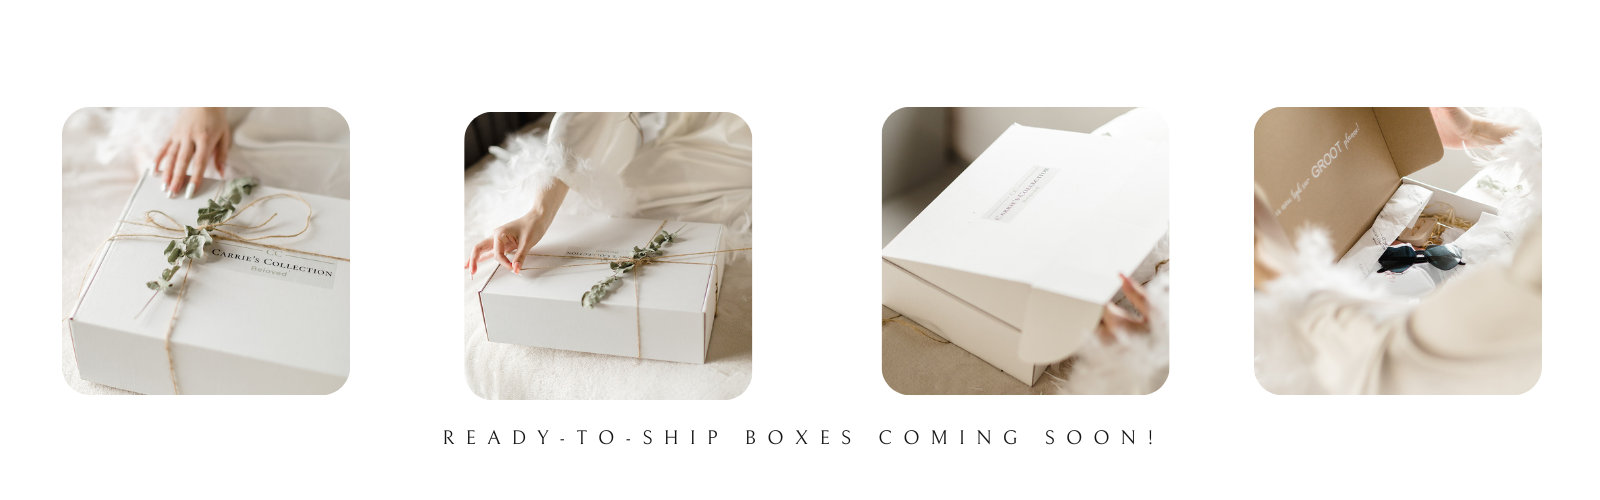 Ready-to-ship Boxes